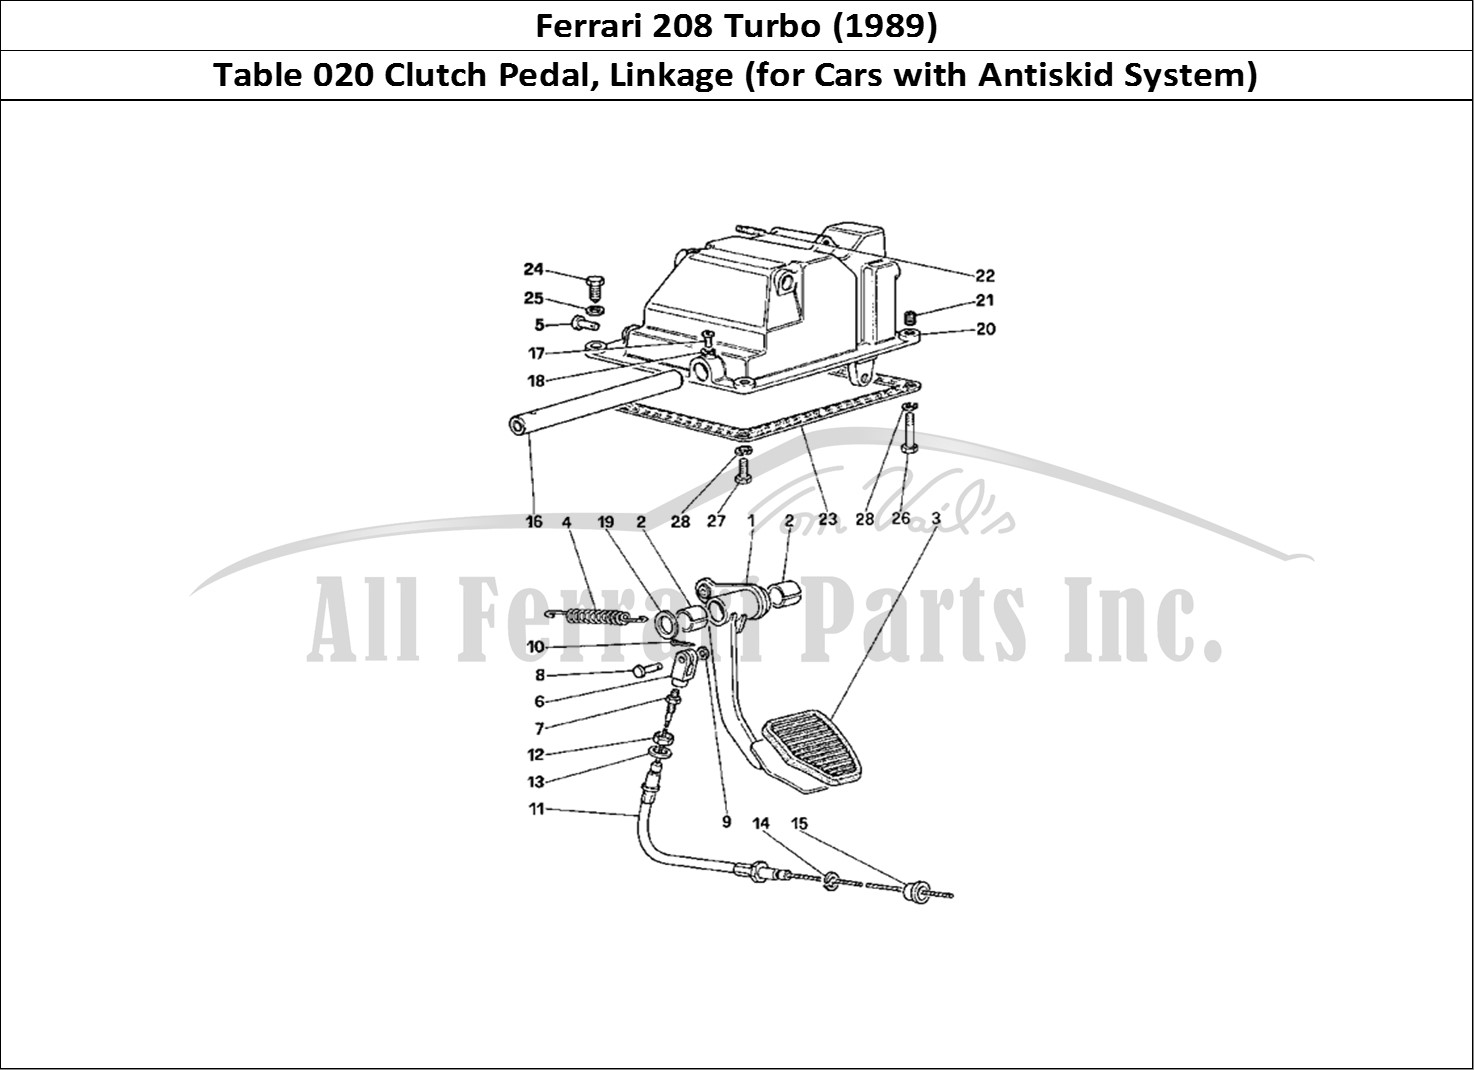 Ferrari Parts Ferrari 208 Turbo (1989) Page 020 Clutch Release Control (f